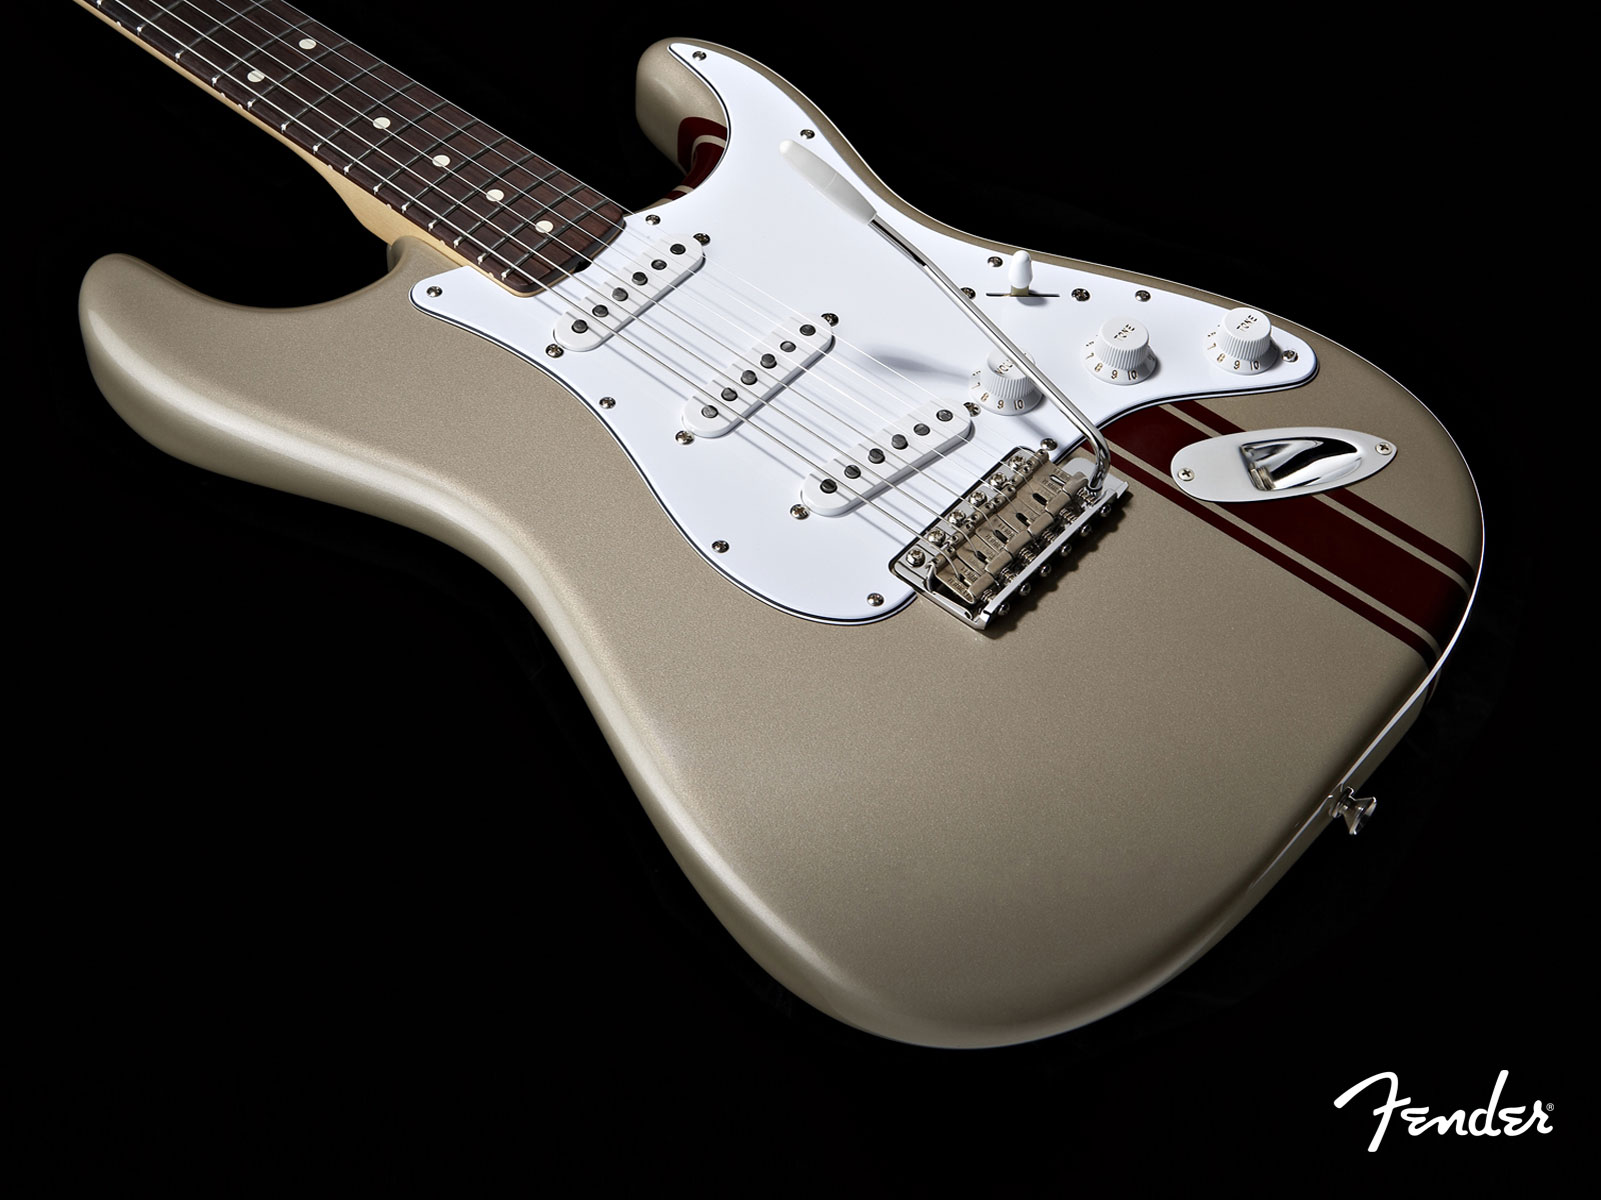 Fender Stratocaster Wallpaper By Cmdry72